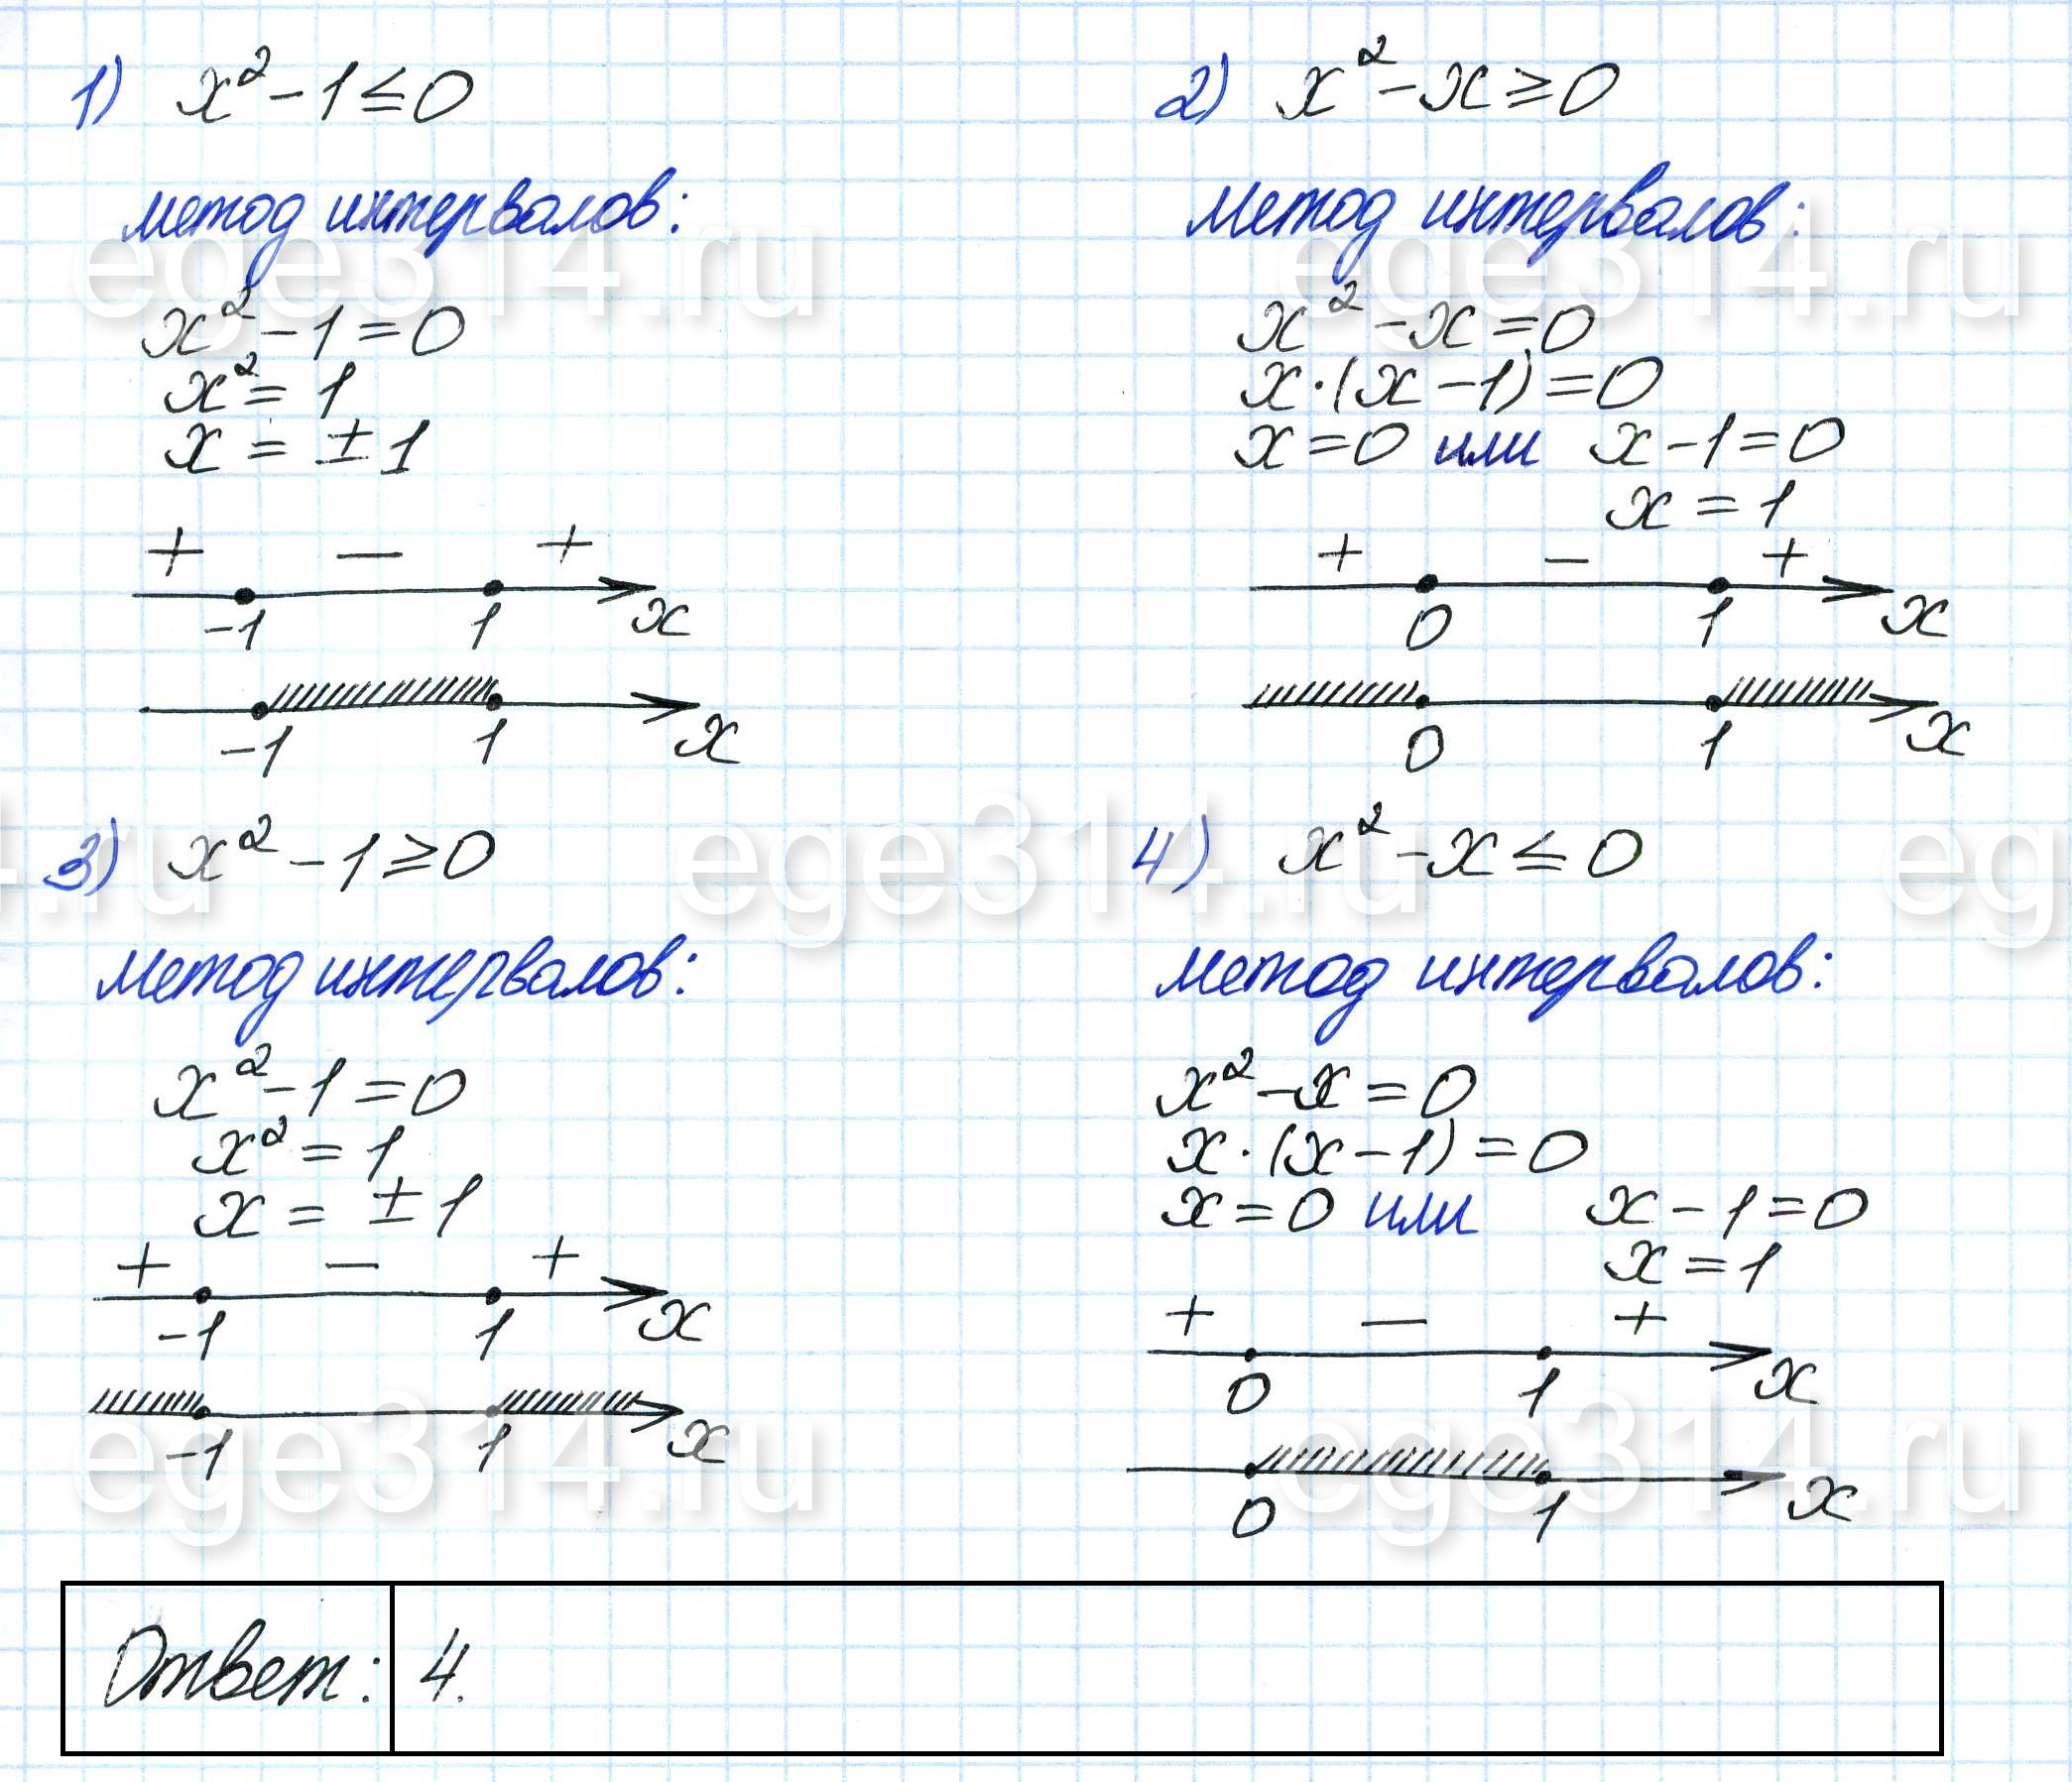 Укажите неравенство, решение которого изображено на рисунке. 1) x^2 – 1≤ 0 2) x^2 – x ≥ 0 3) x^2 – 1 ≥ 0 4) x^2 – x ≤ 0